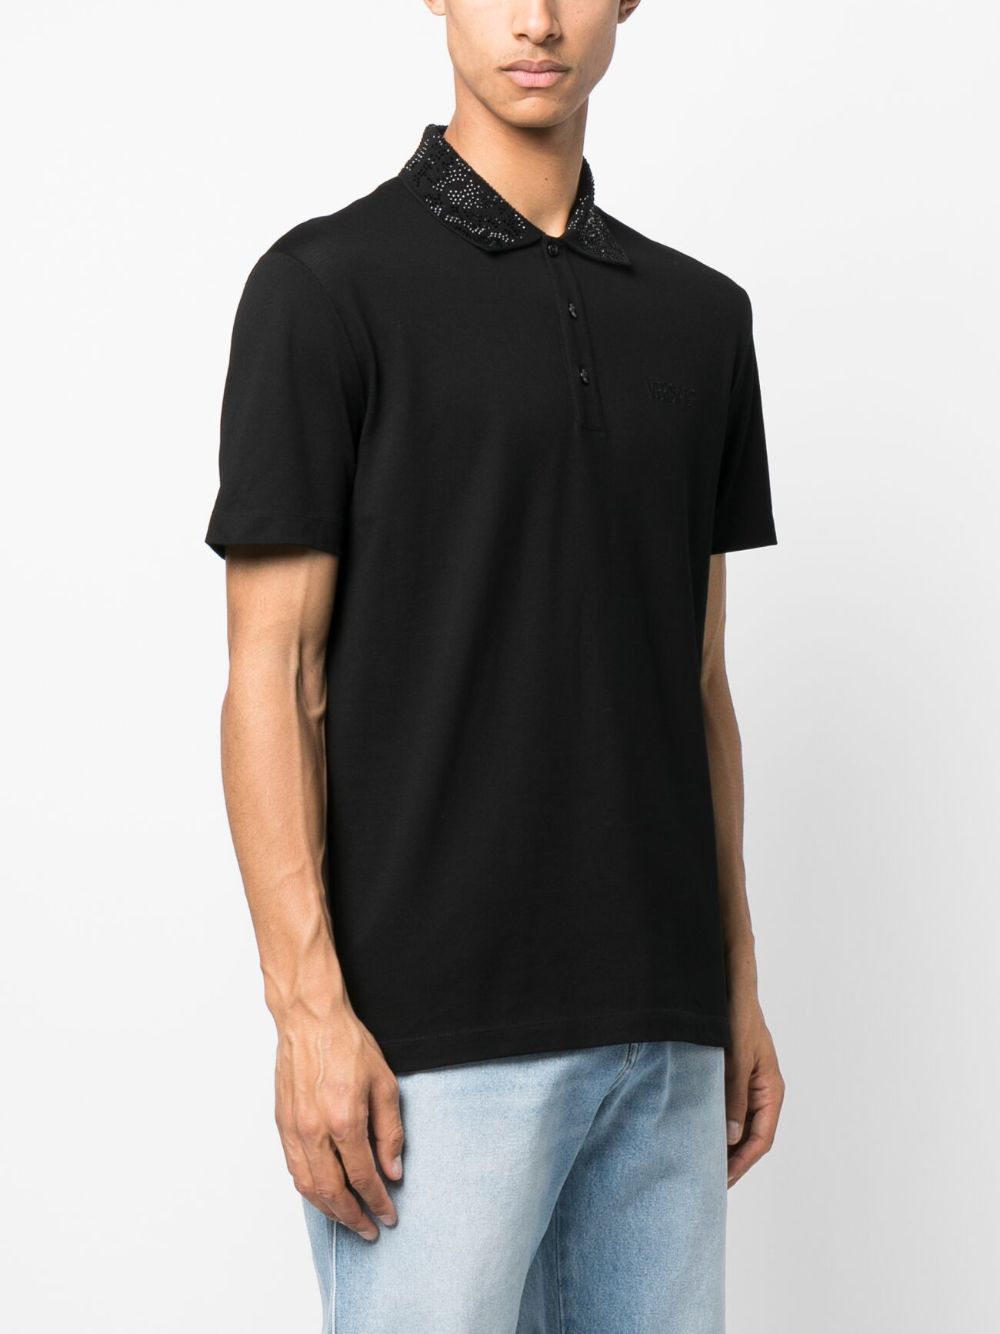 VERSACE Baroque Silhouette Polo Shirt in Black for Men